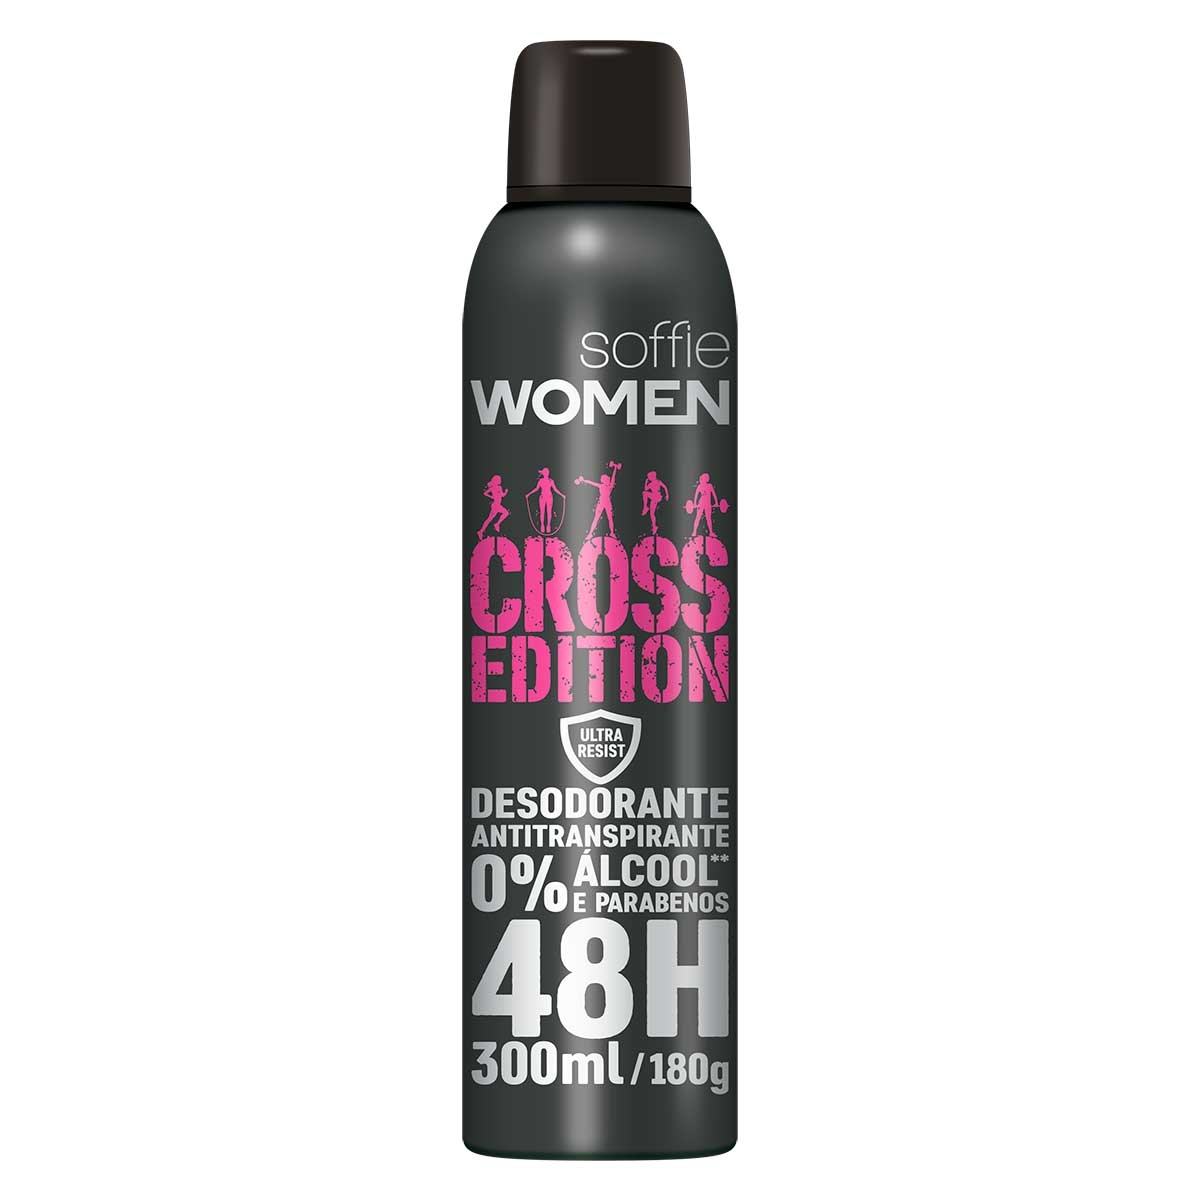 Desodorante Soffie Women Cross Edition Aerossol Antitranspirante 48h com 300ml 300ml